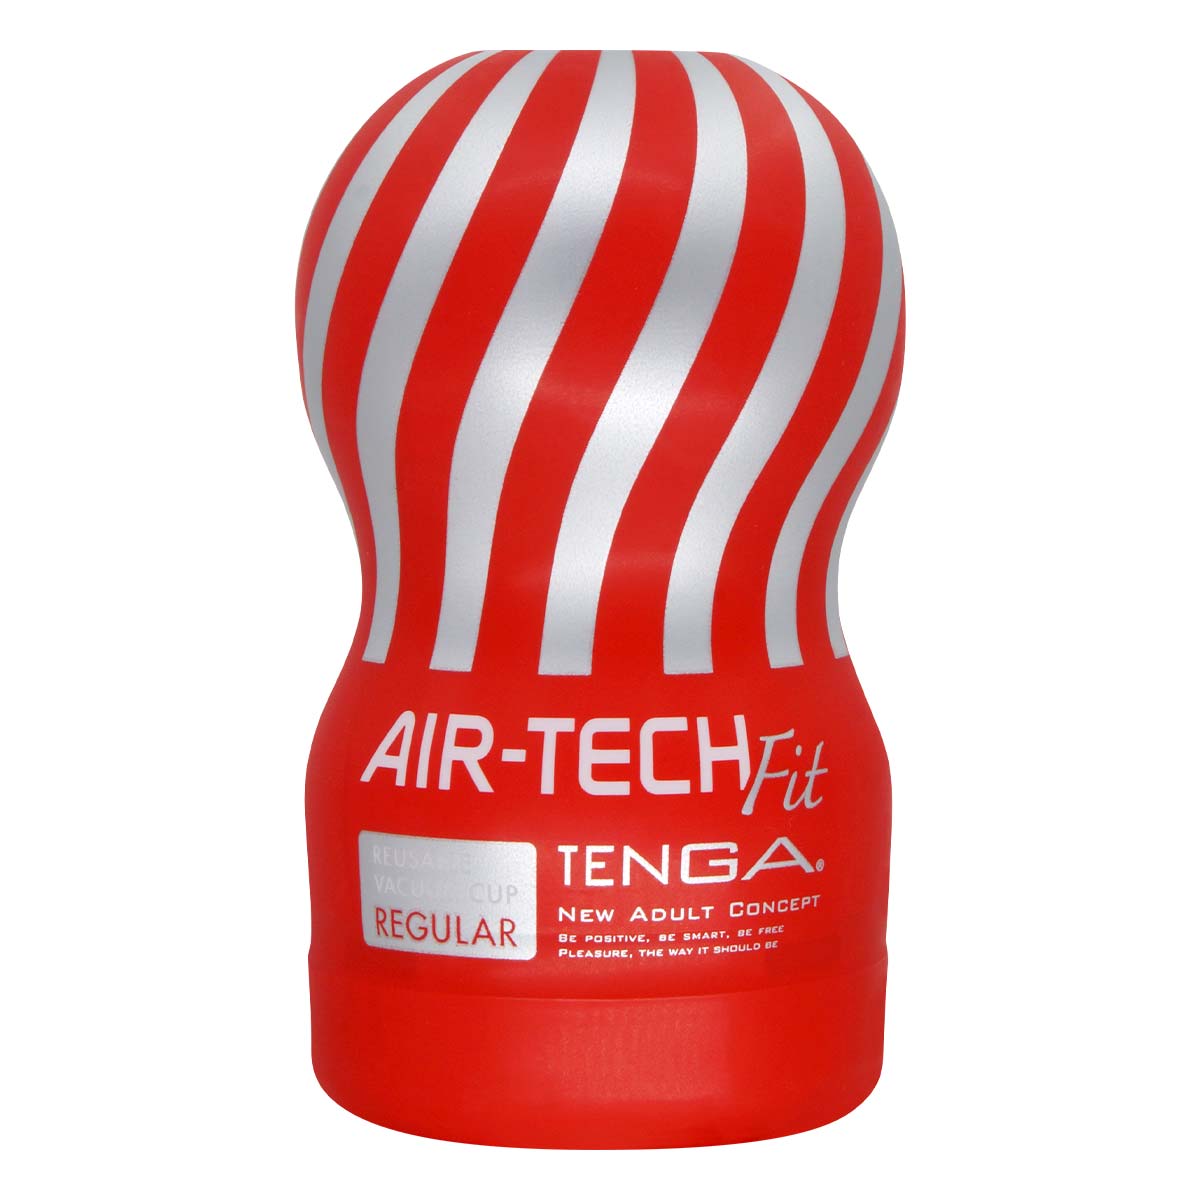 TENGA AIR-TECH Fit REUSABLE VACUUM CUP REGULAR-thumb_2